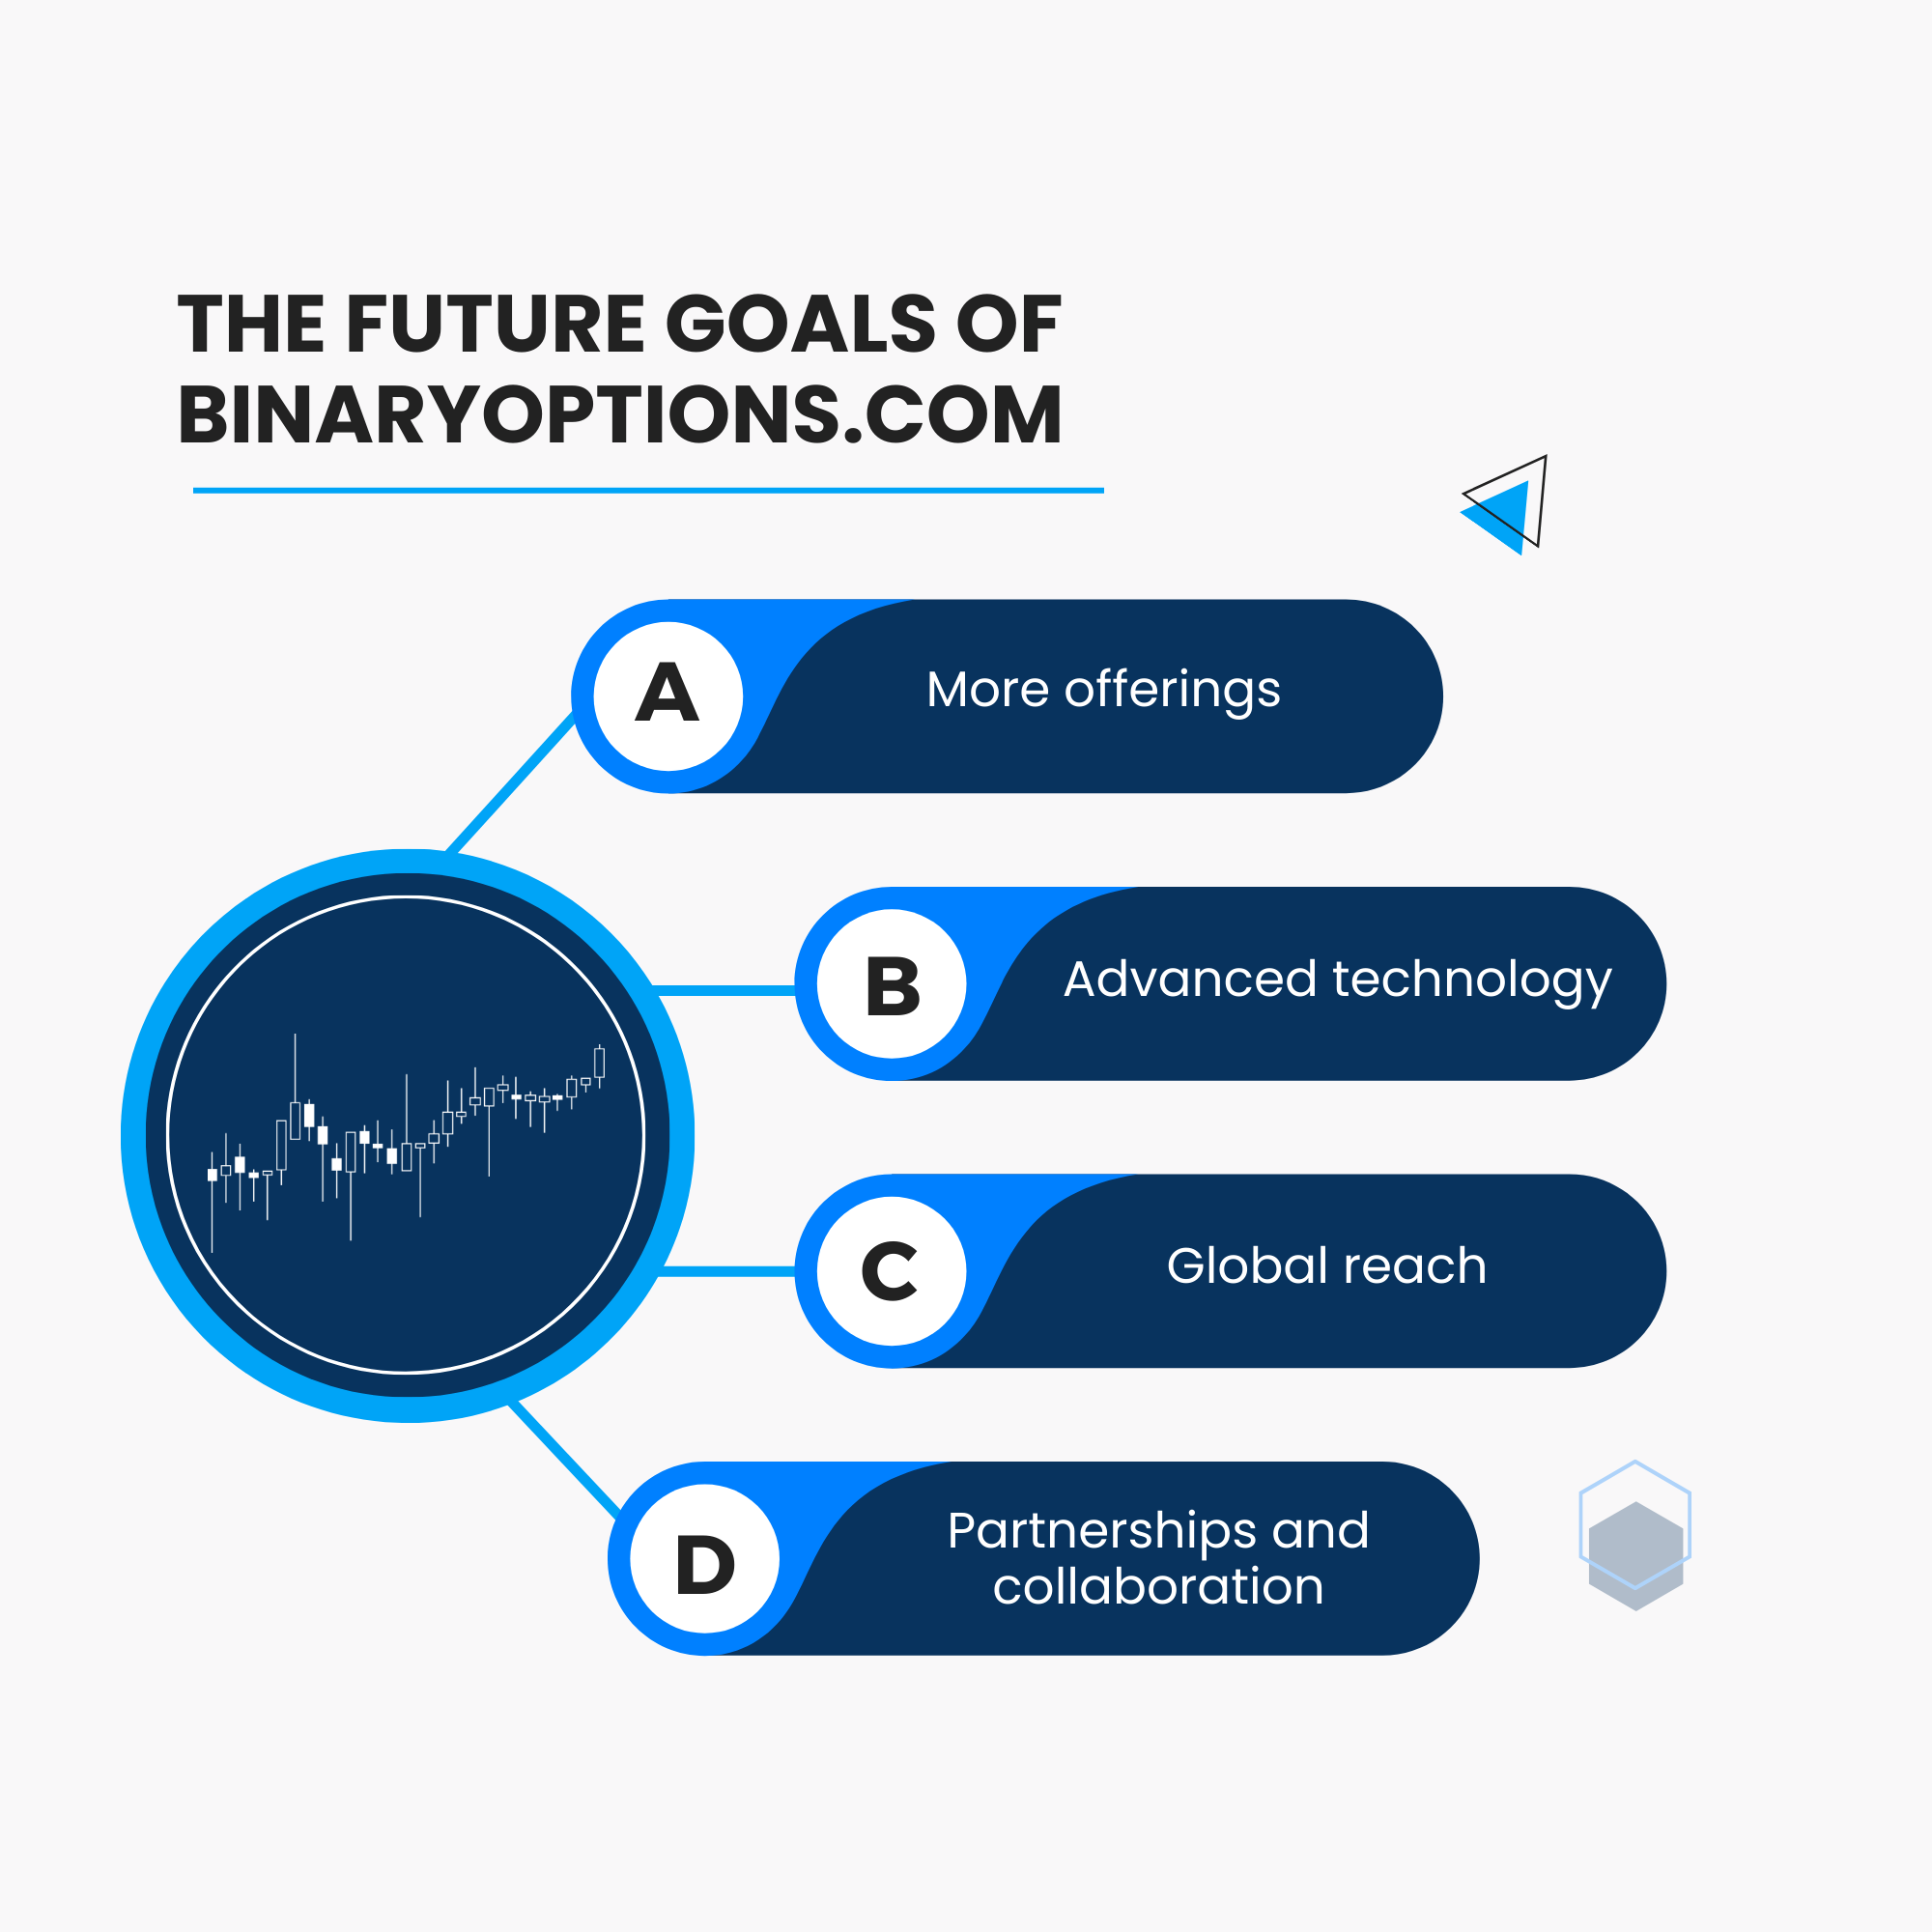 The future goals of Binaryoptions.com